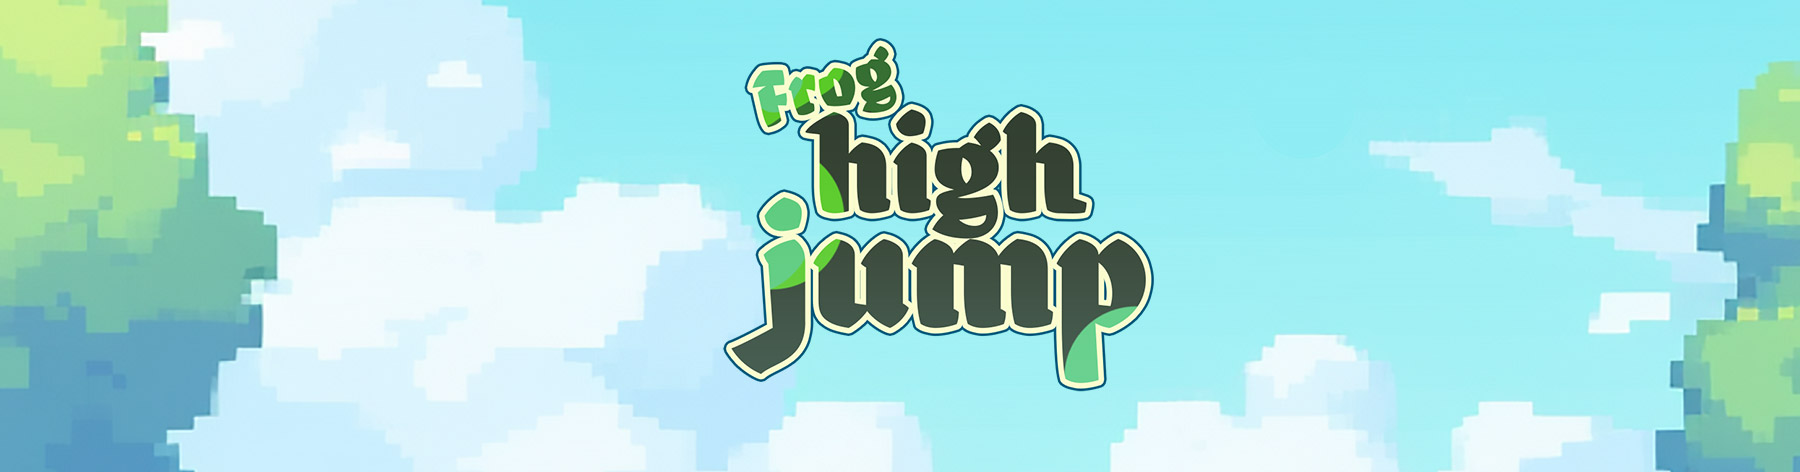 Frog high jump